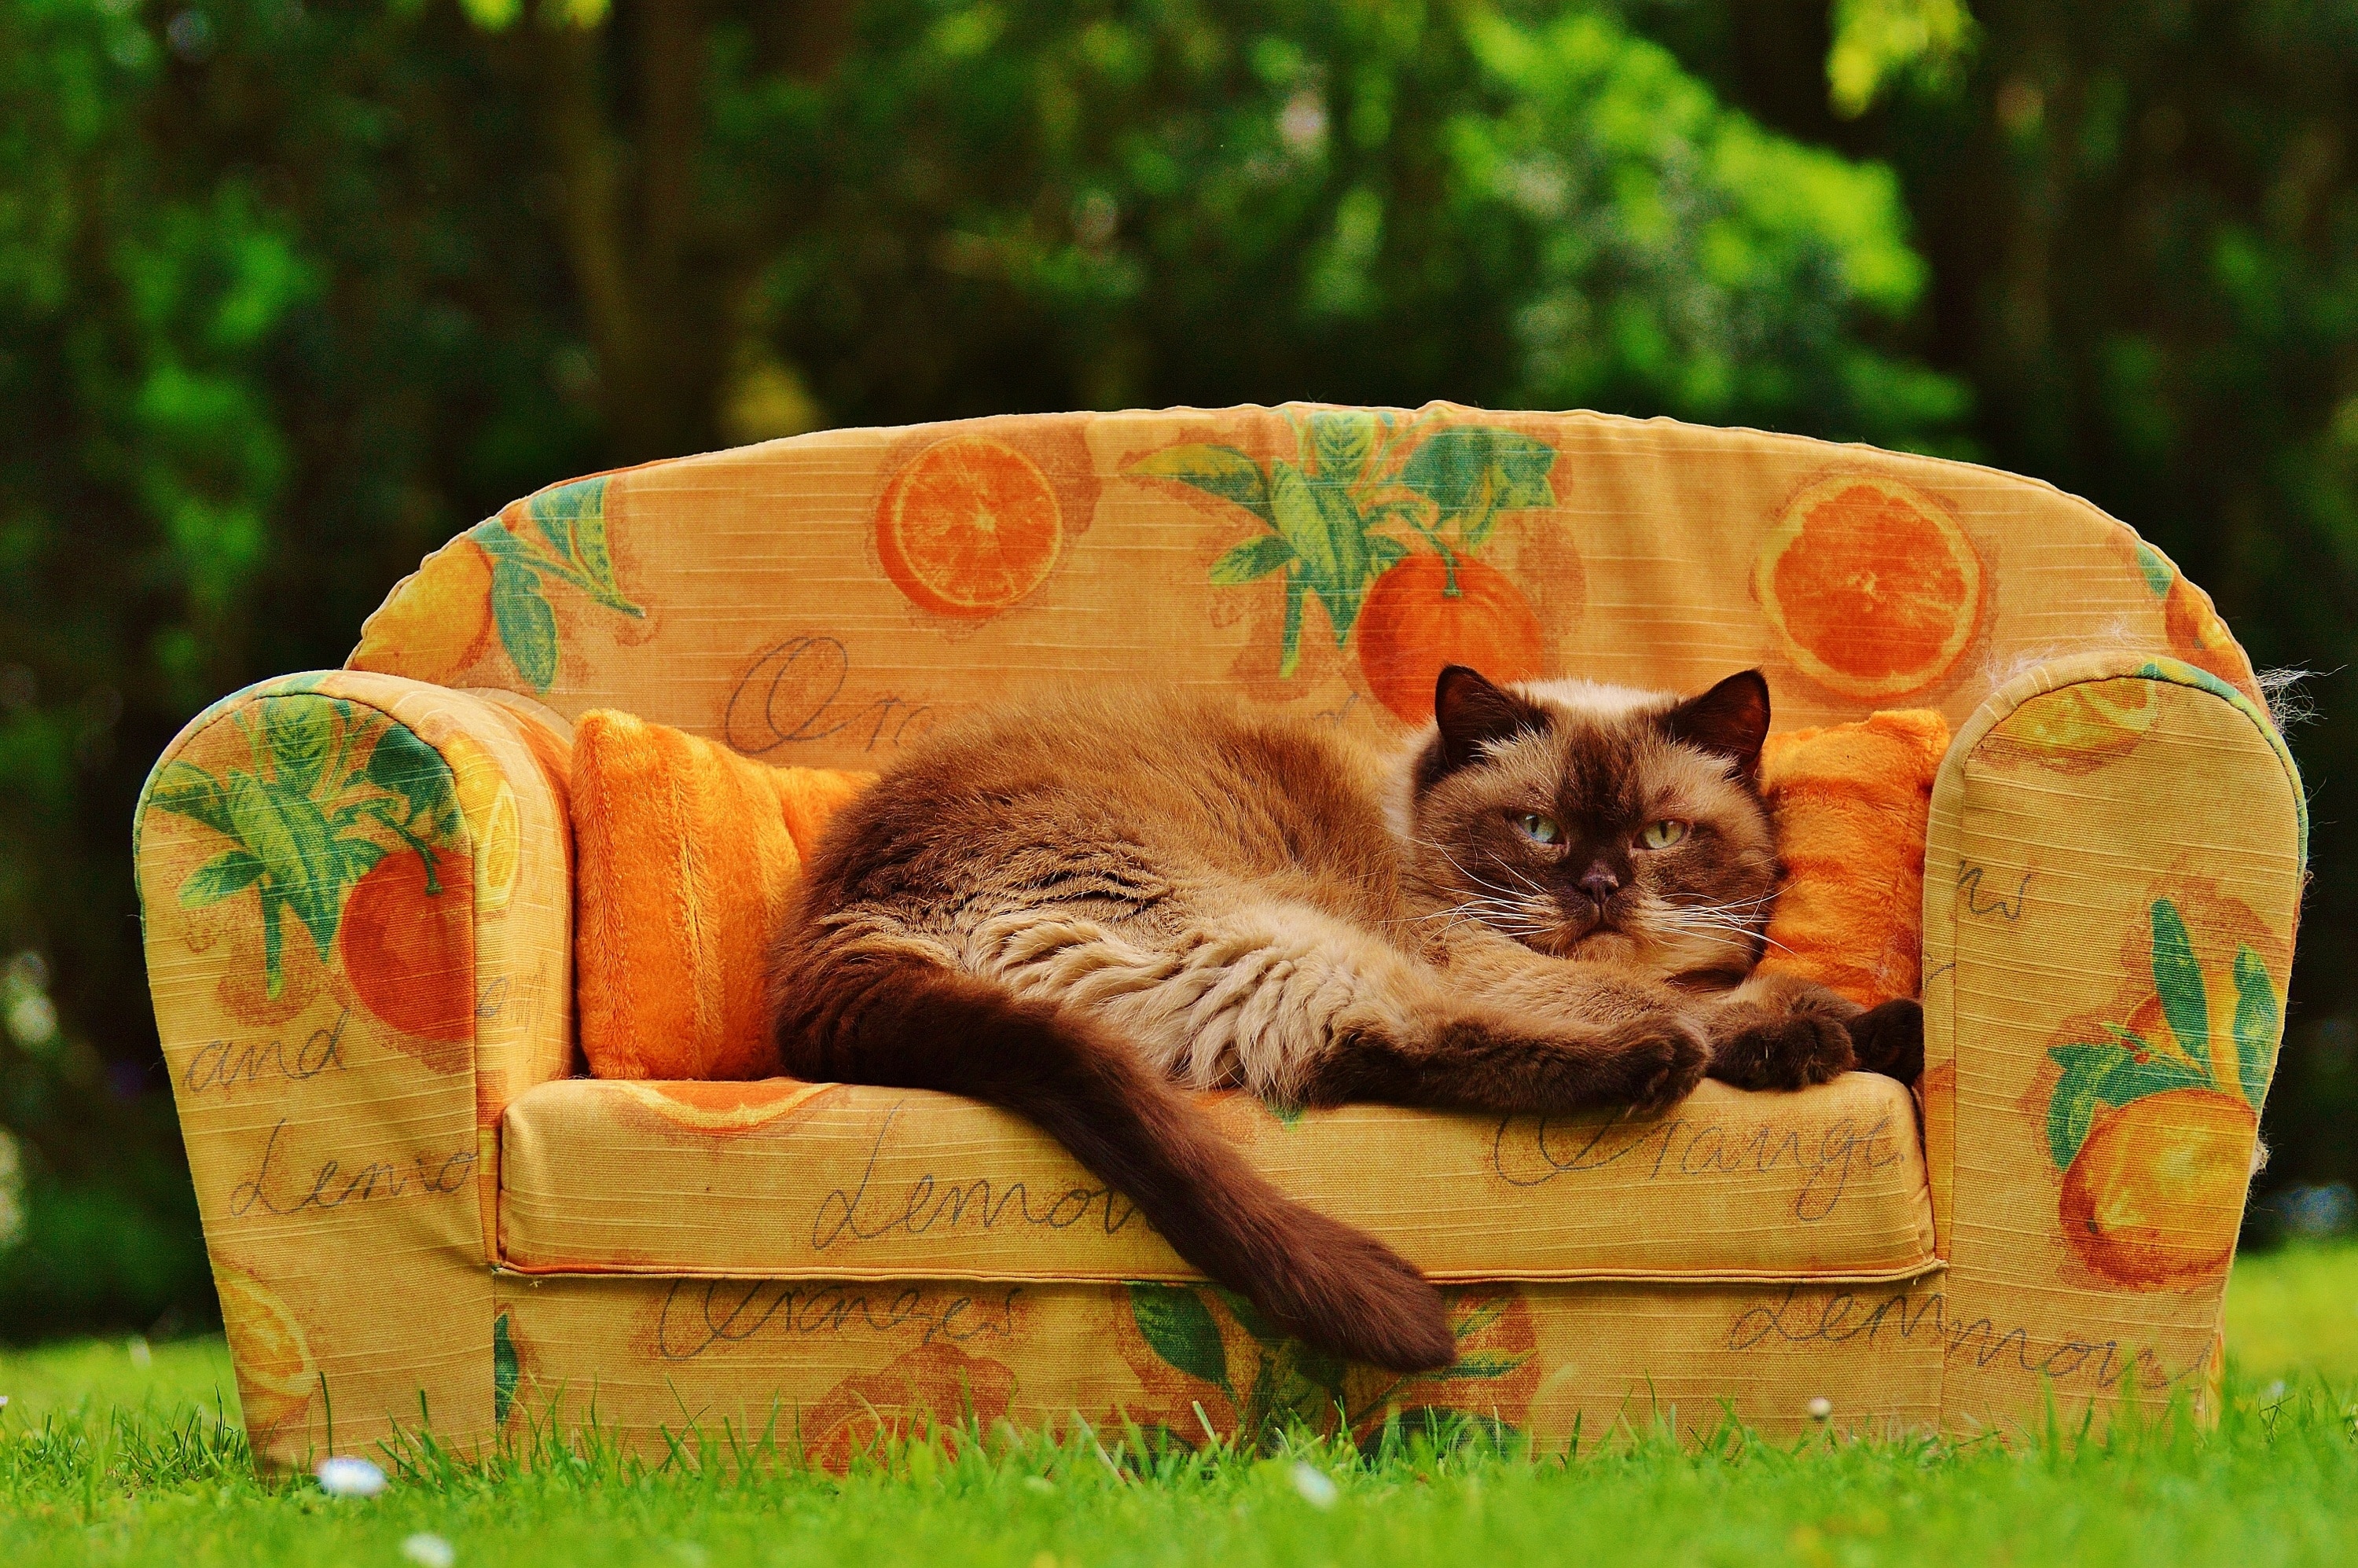 British Shorthair, Sofa, Couch, Cat, grass, one animal